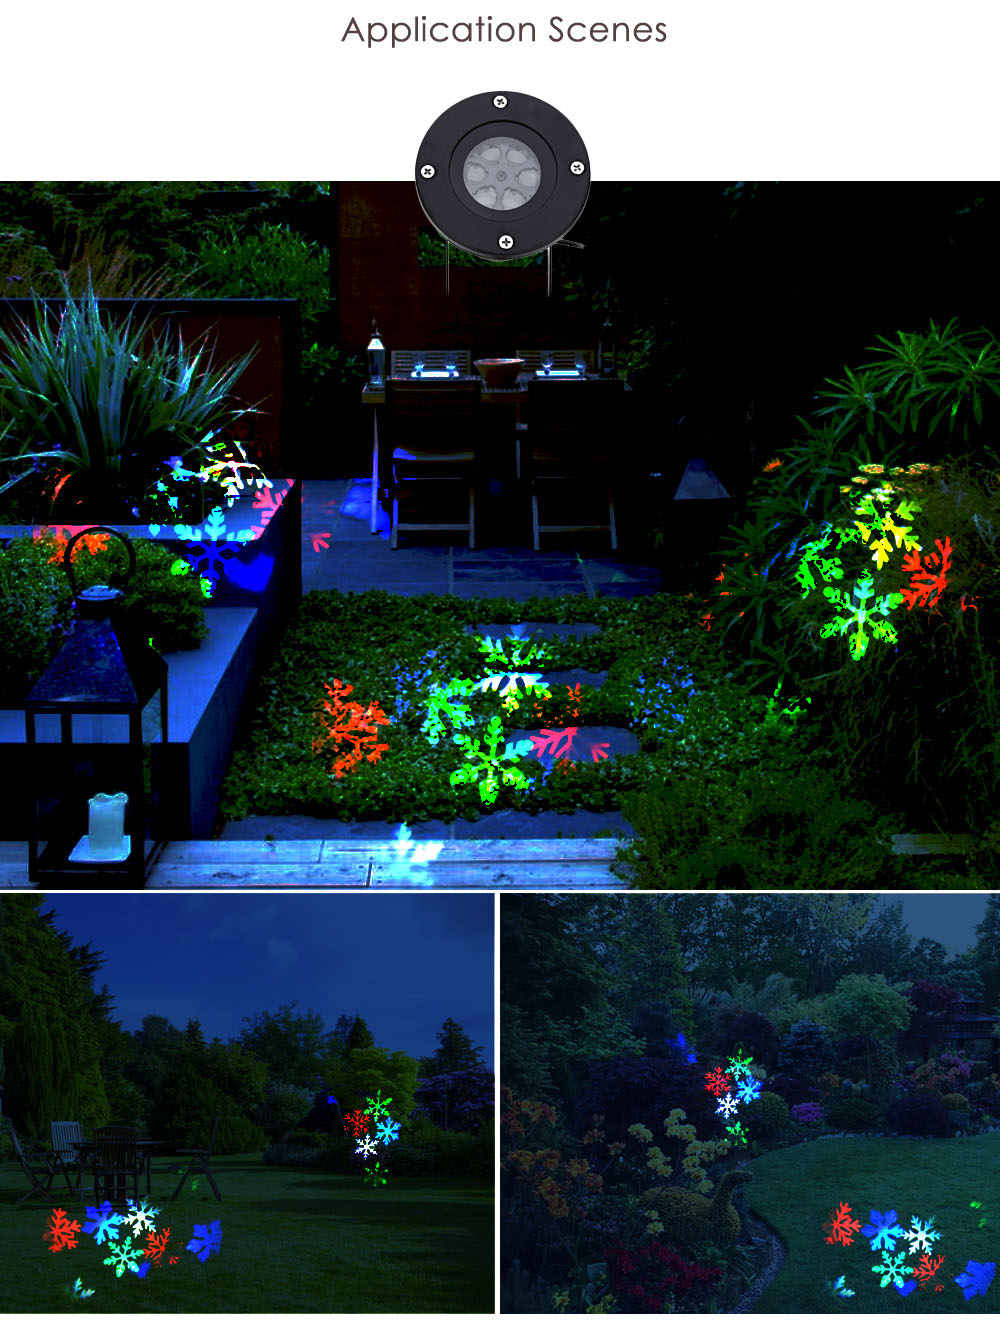 Lightme 110 - 240V 6W LED Colorful Snowflake Light Waterproof Landscape Projector Lamp